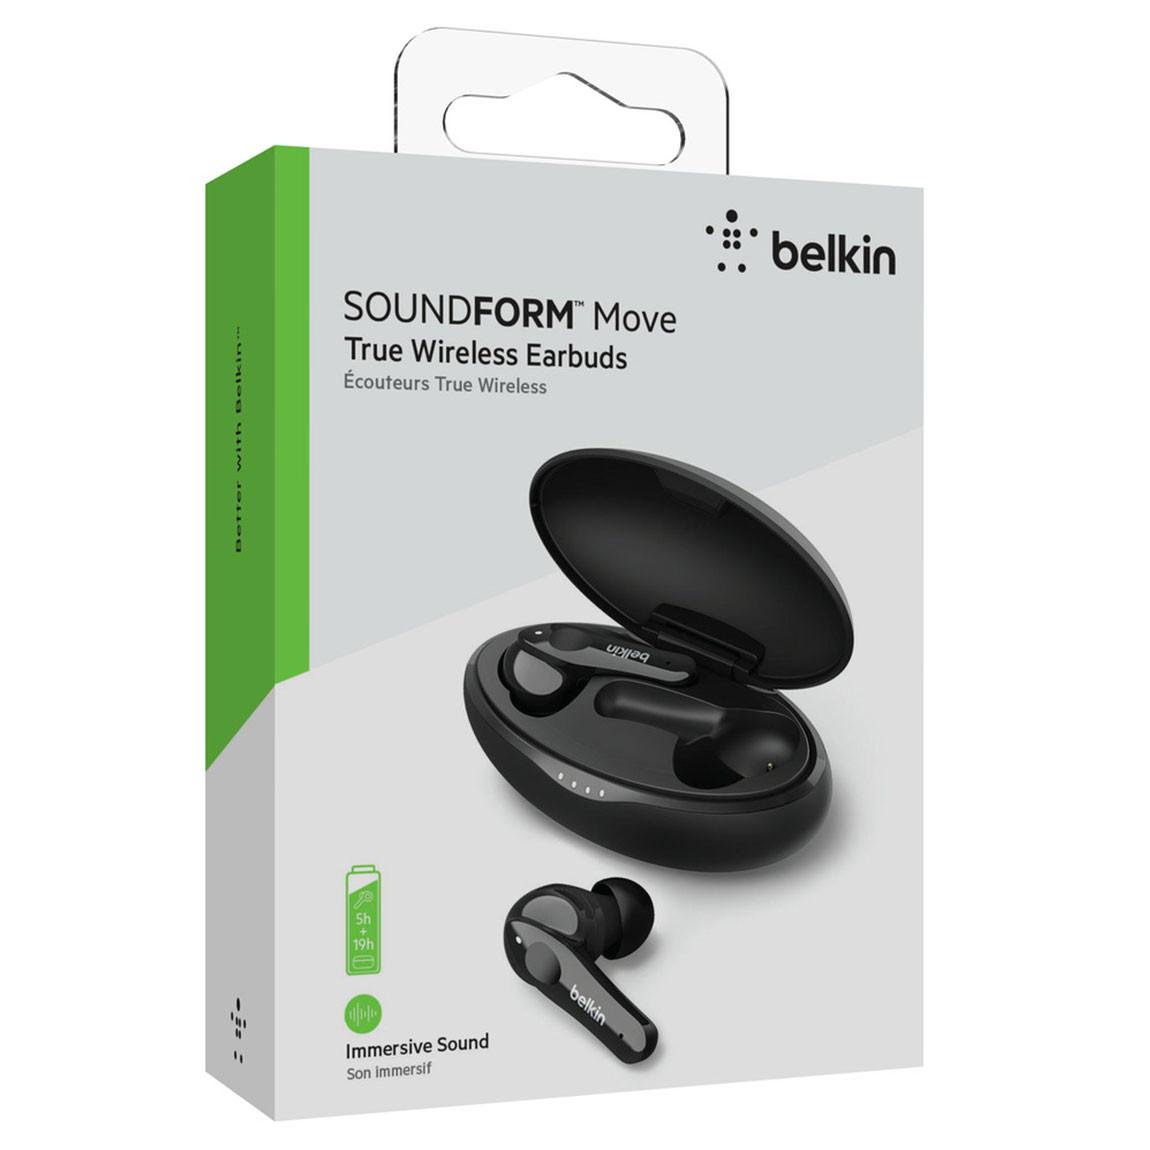 Belkin Soundform Move - Verpackung